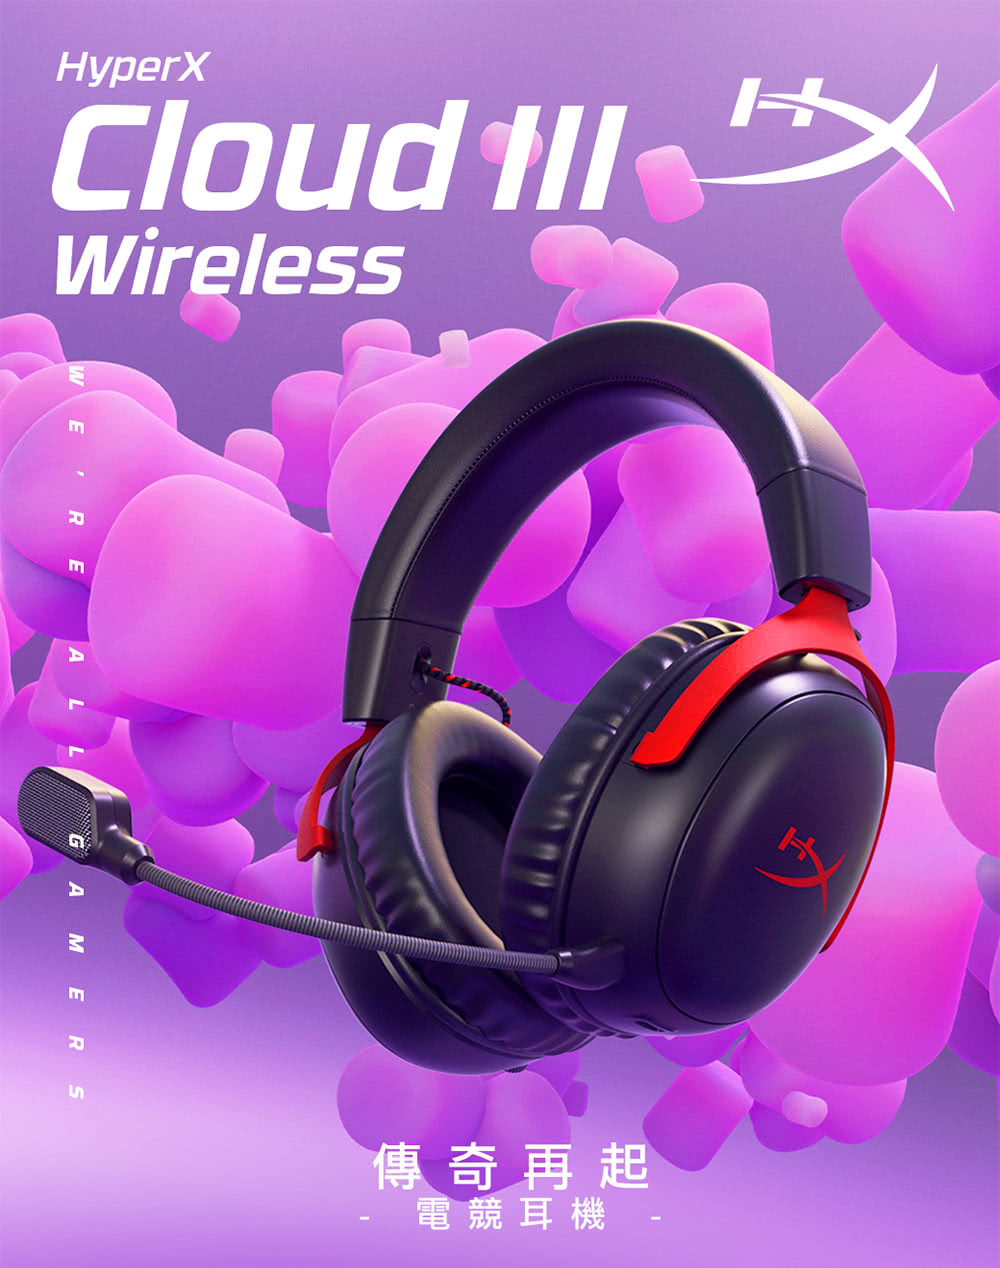 HyperX Cloud III Wireless 颶風3 